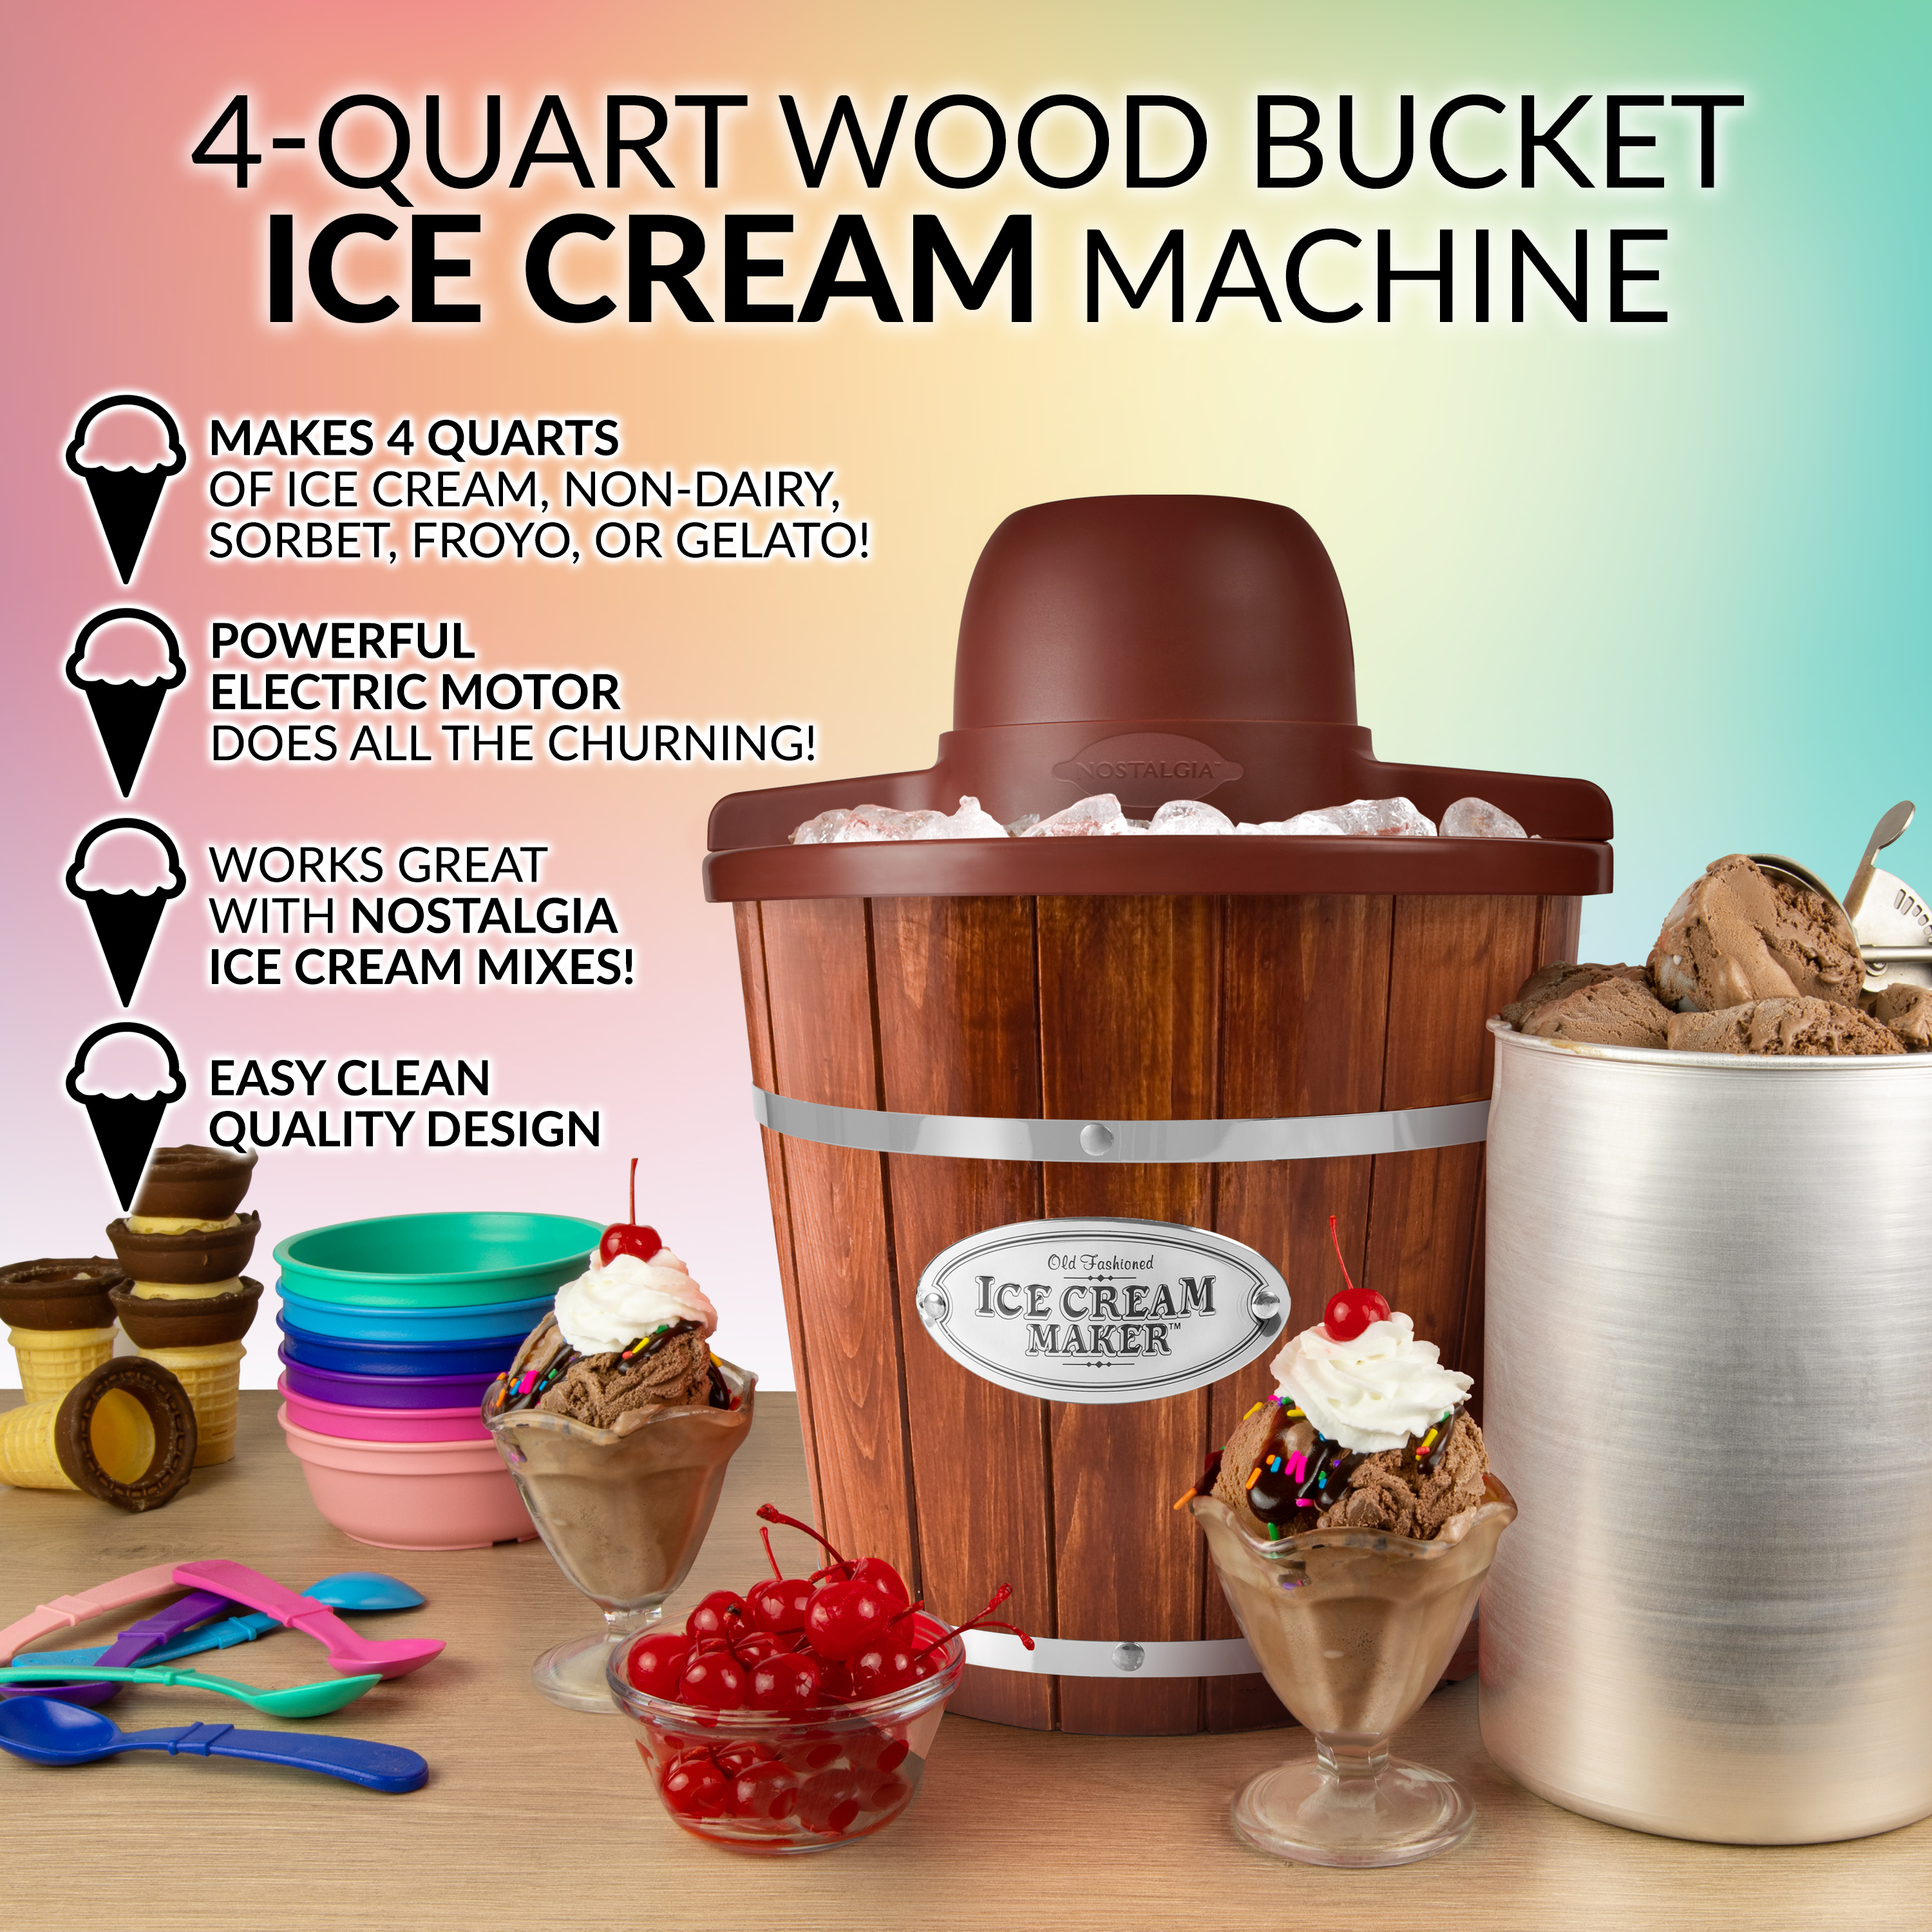 Nostalgia 4 Quart Wooden Ice Cream Bucket - image 3 of 11